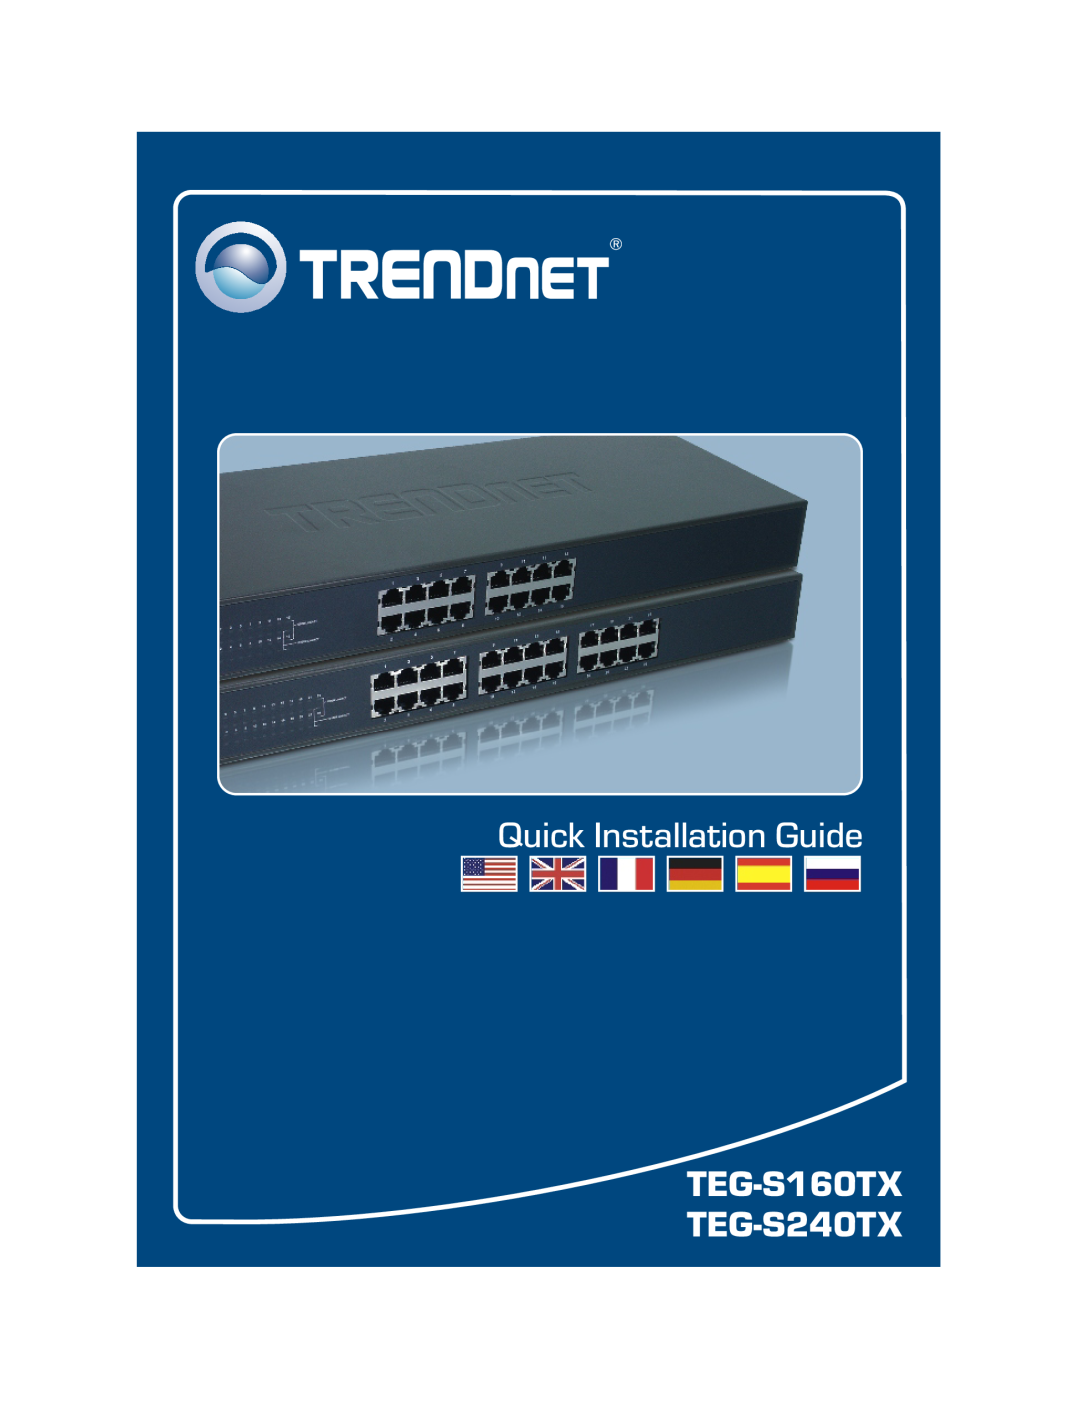 TRENDnet manual Quick Installation Guide, TEG-S160TX TEG-S240TX 